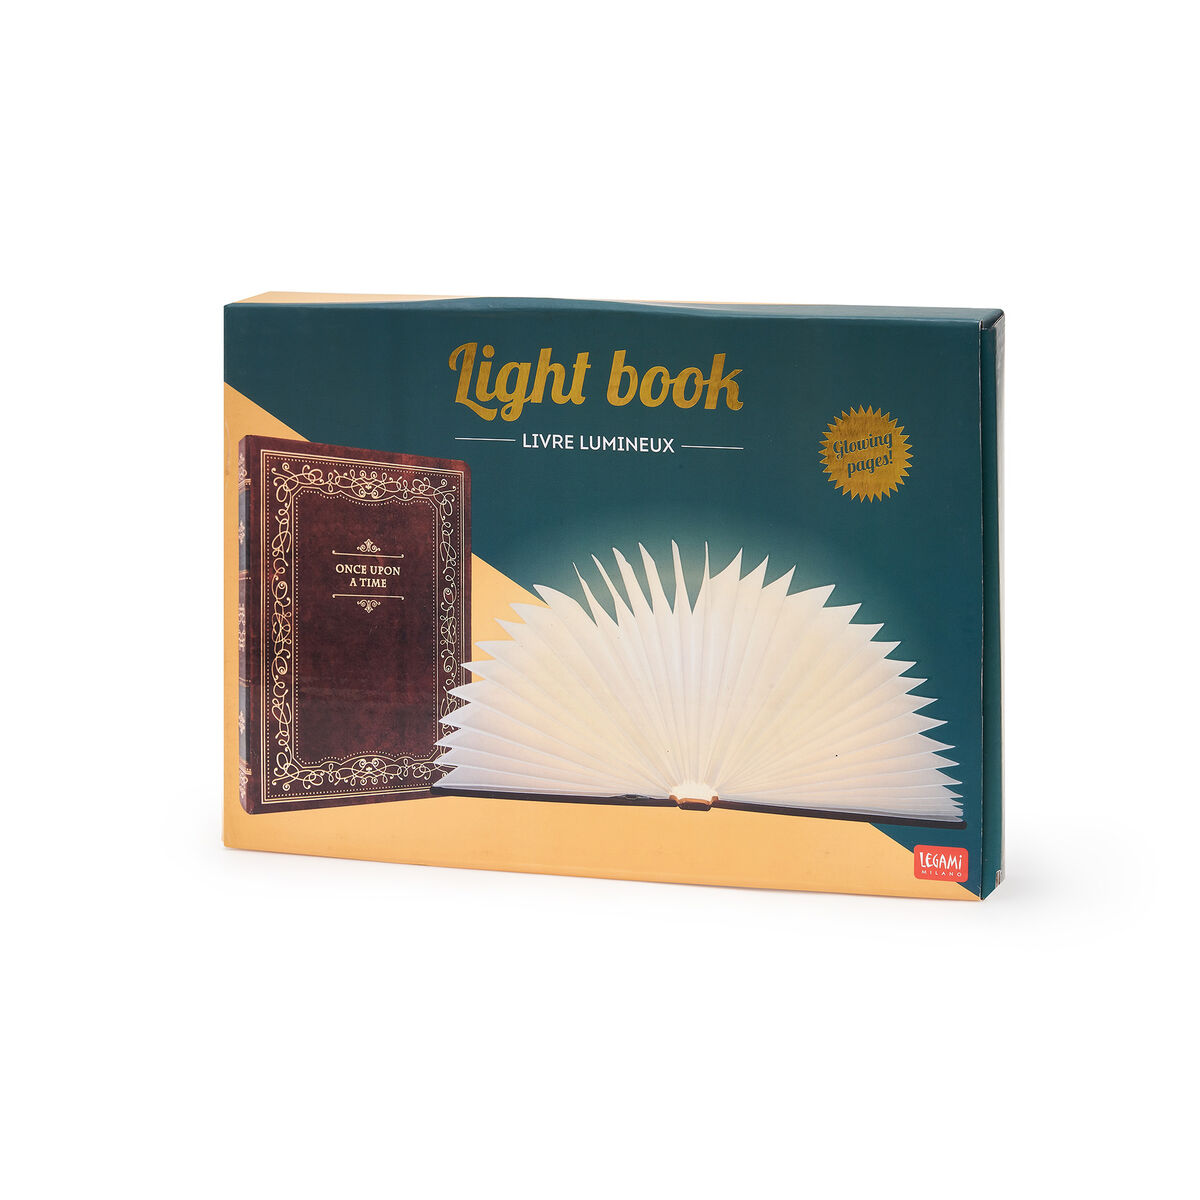 Livre Lumineux Large - Light Book VINTAGE BOOK_2